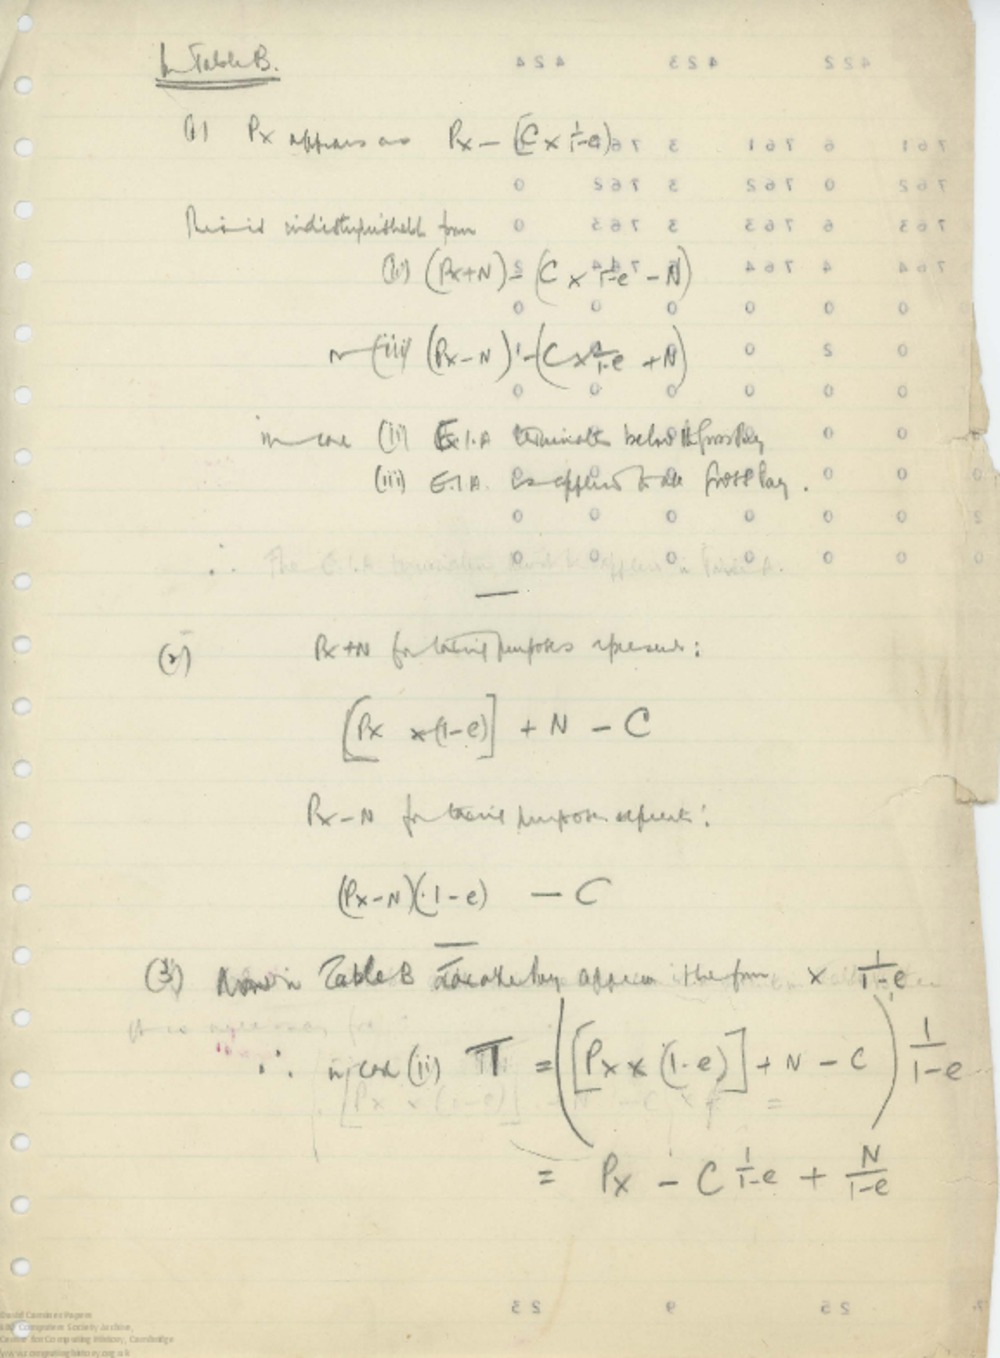 Article: 62930 David Caminer's calculations for 1955/56 Tax Tables job